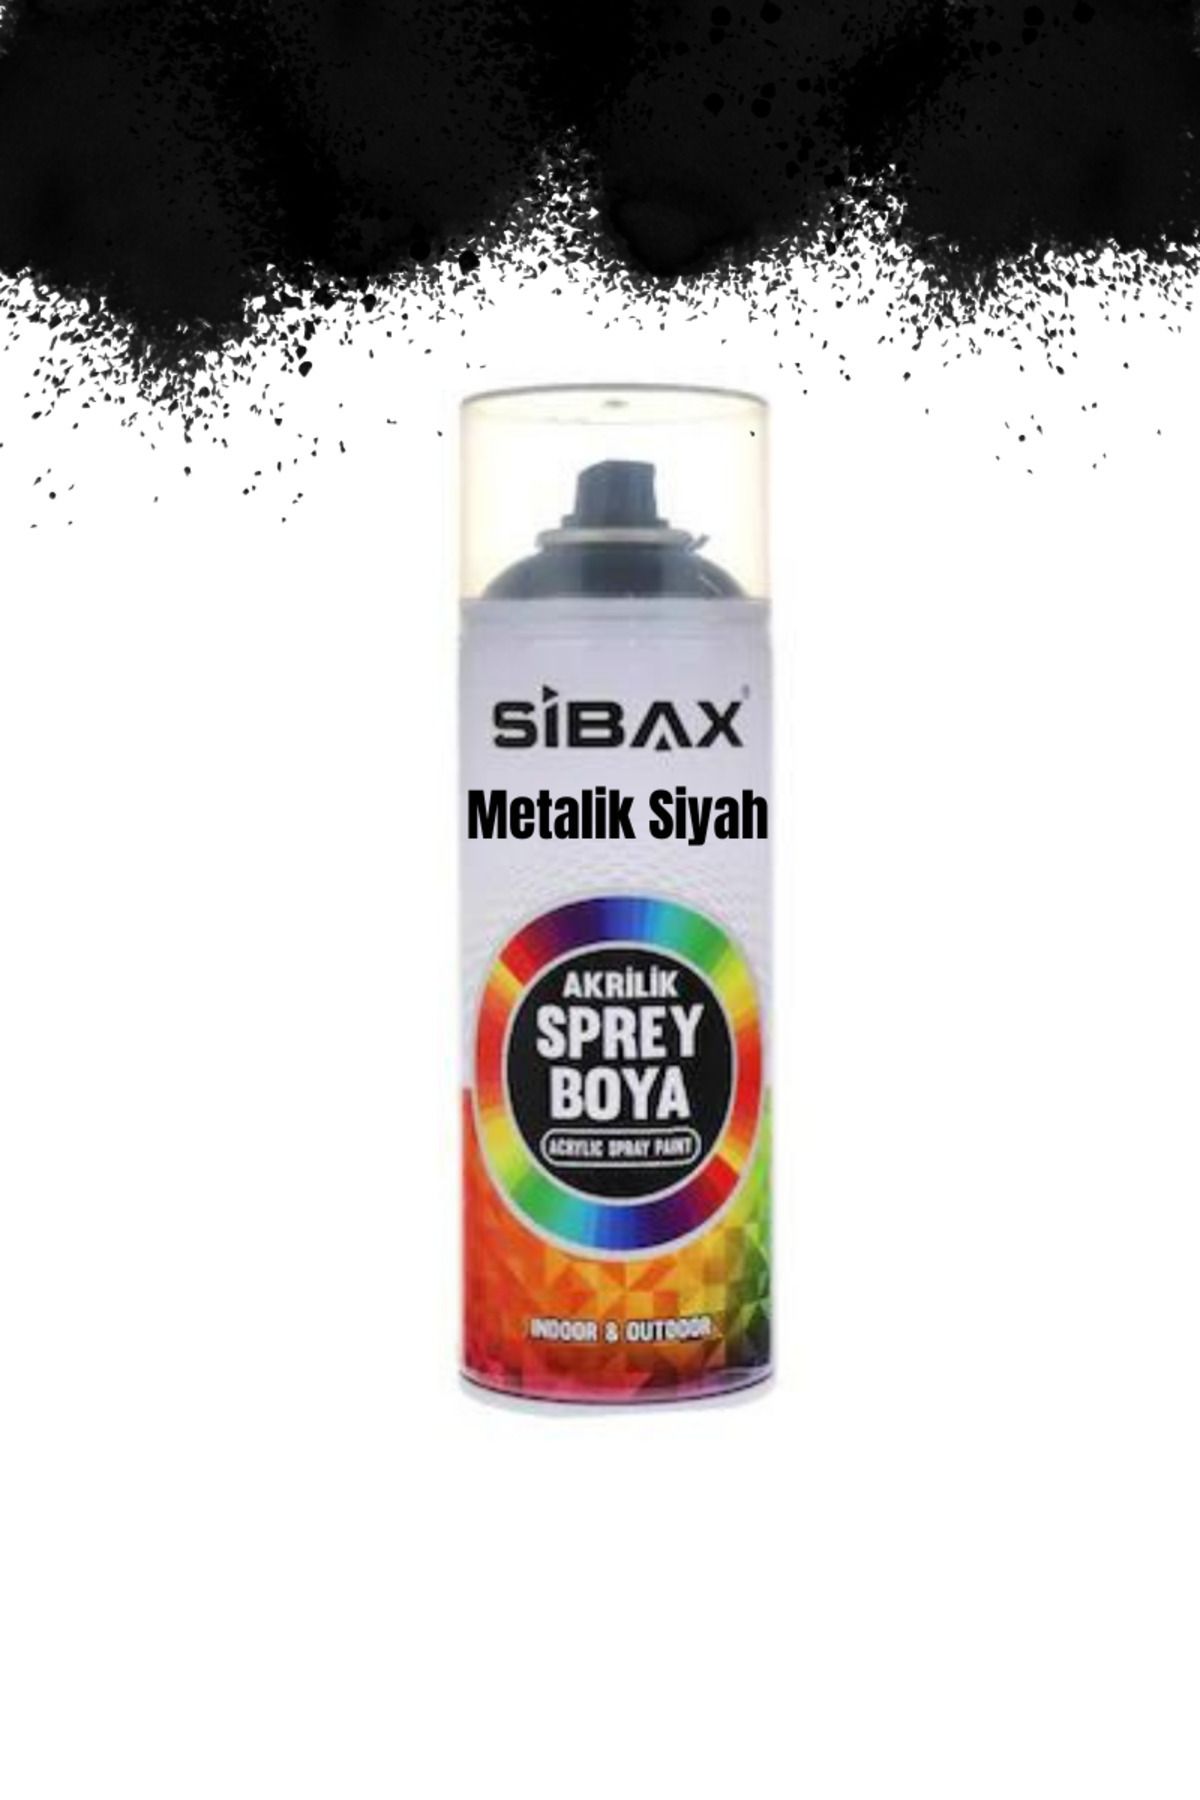 Sibax Akrilik Sprey Boya Metalik Siyah 400 ml